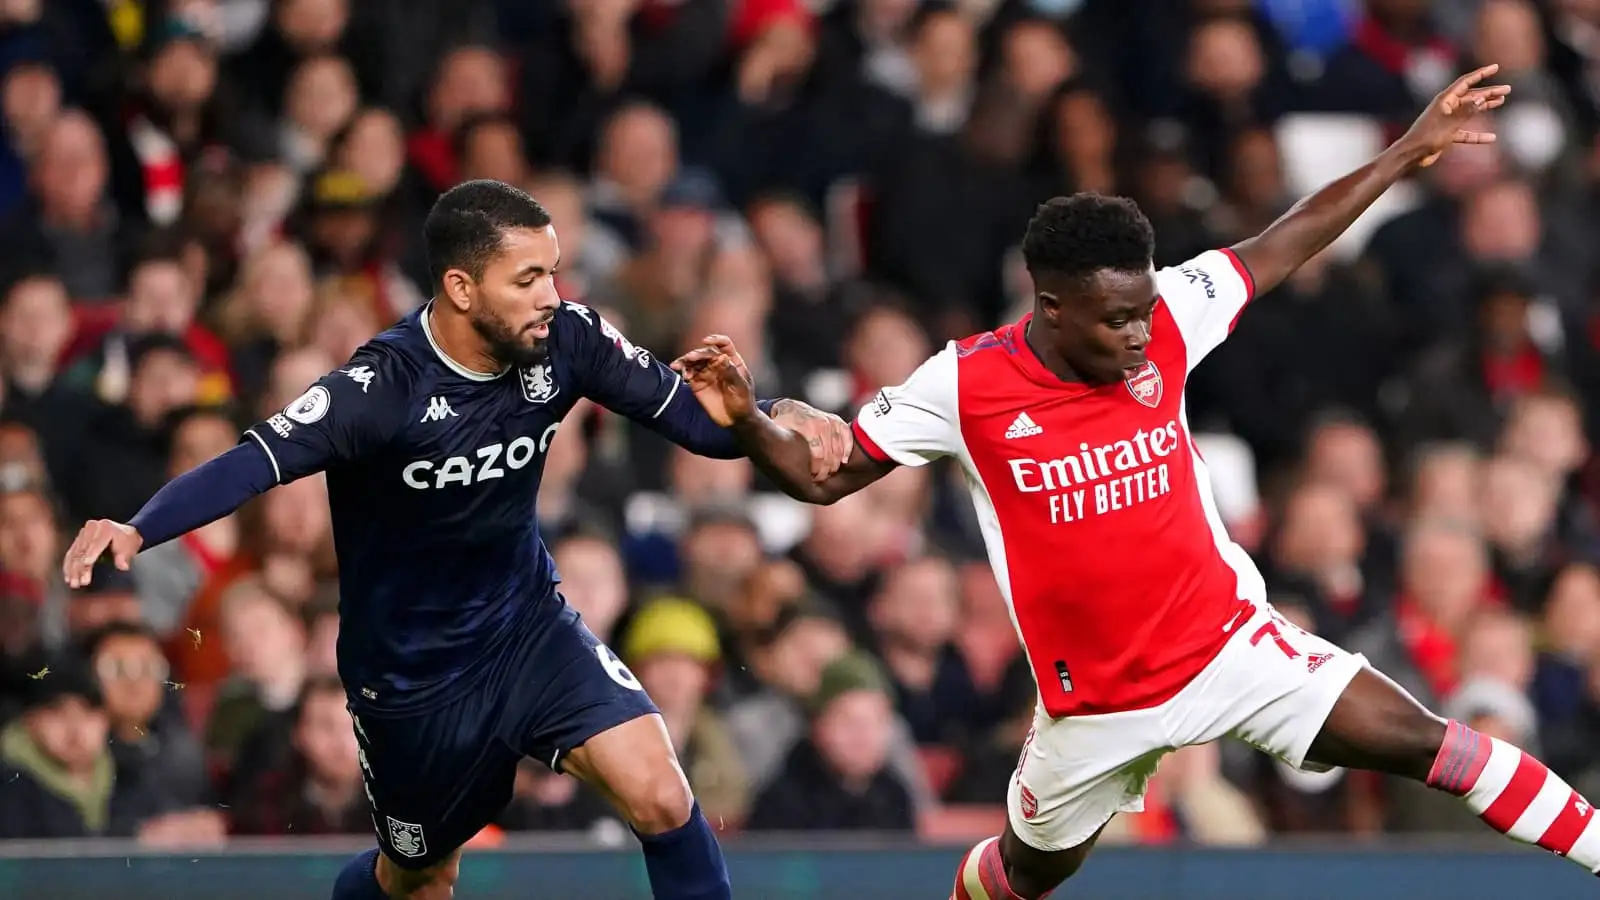 Aston Villa midfielder Douglas Luiz battling Arsenal forward Bukayo Saka